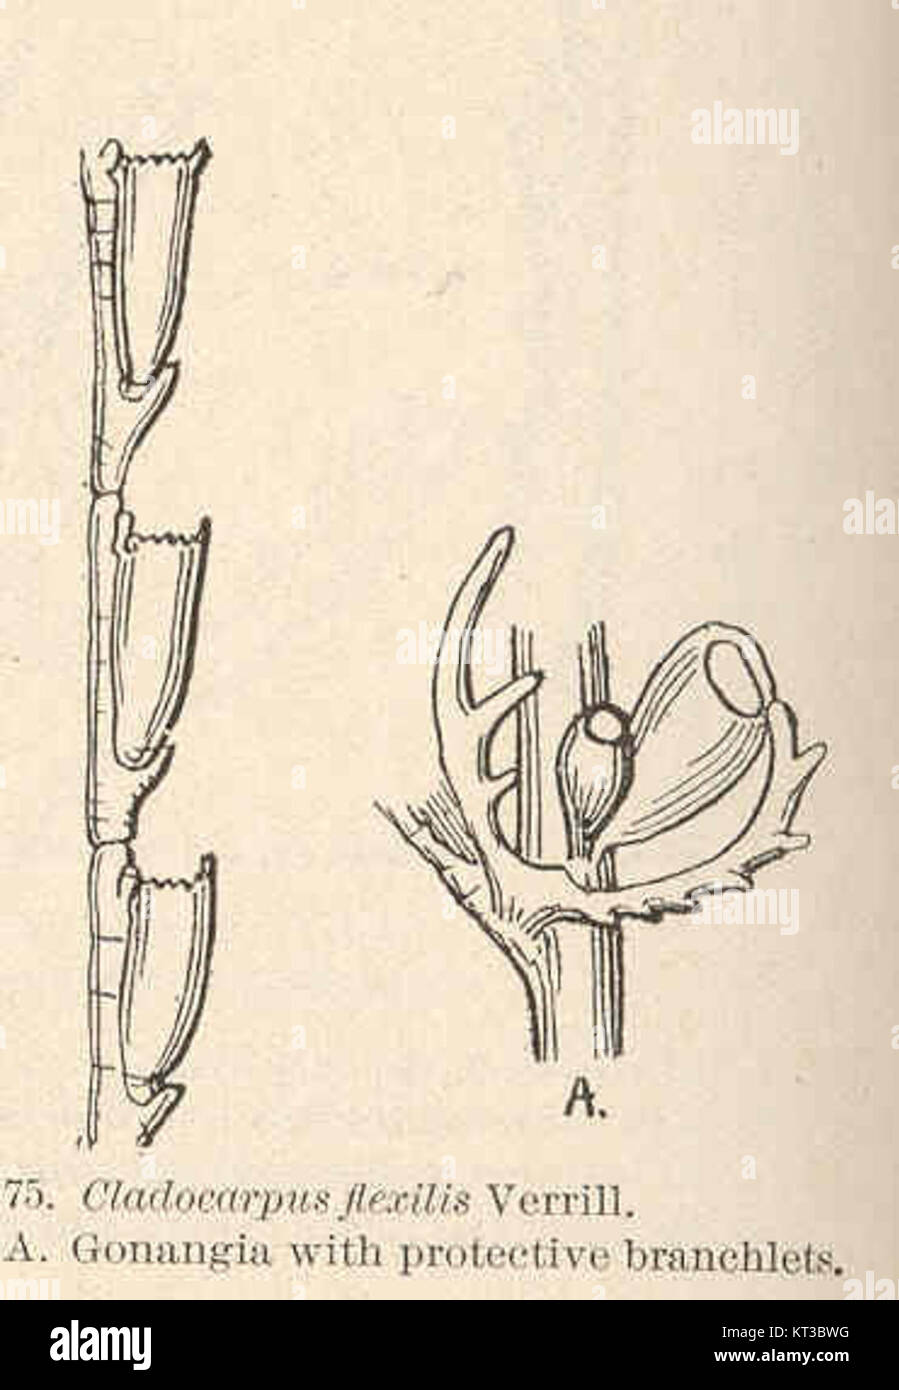 40611 Cladocarpus flexilis Verrill AGonangla with protective branchlets Stock Photo